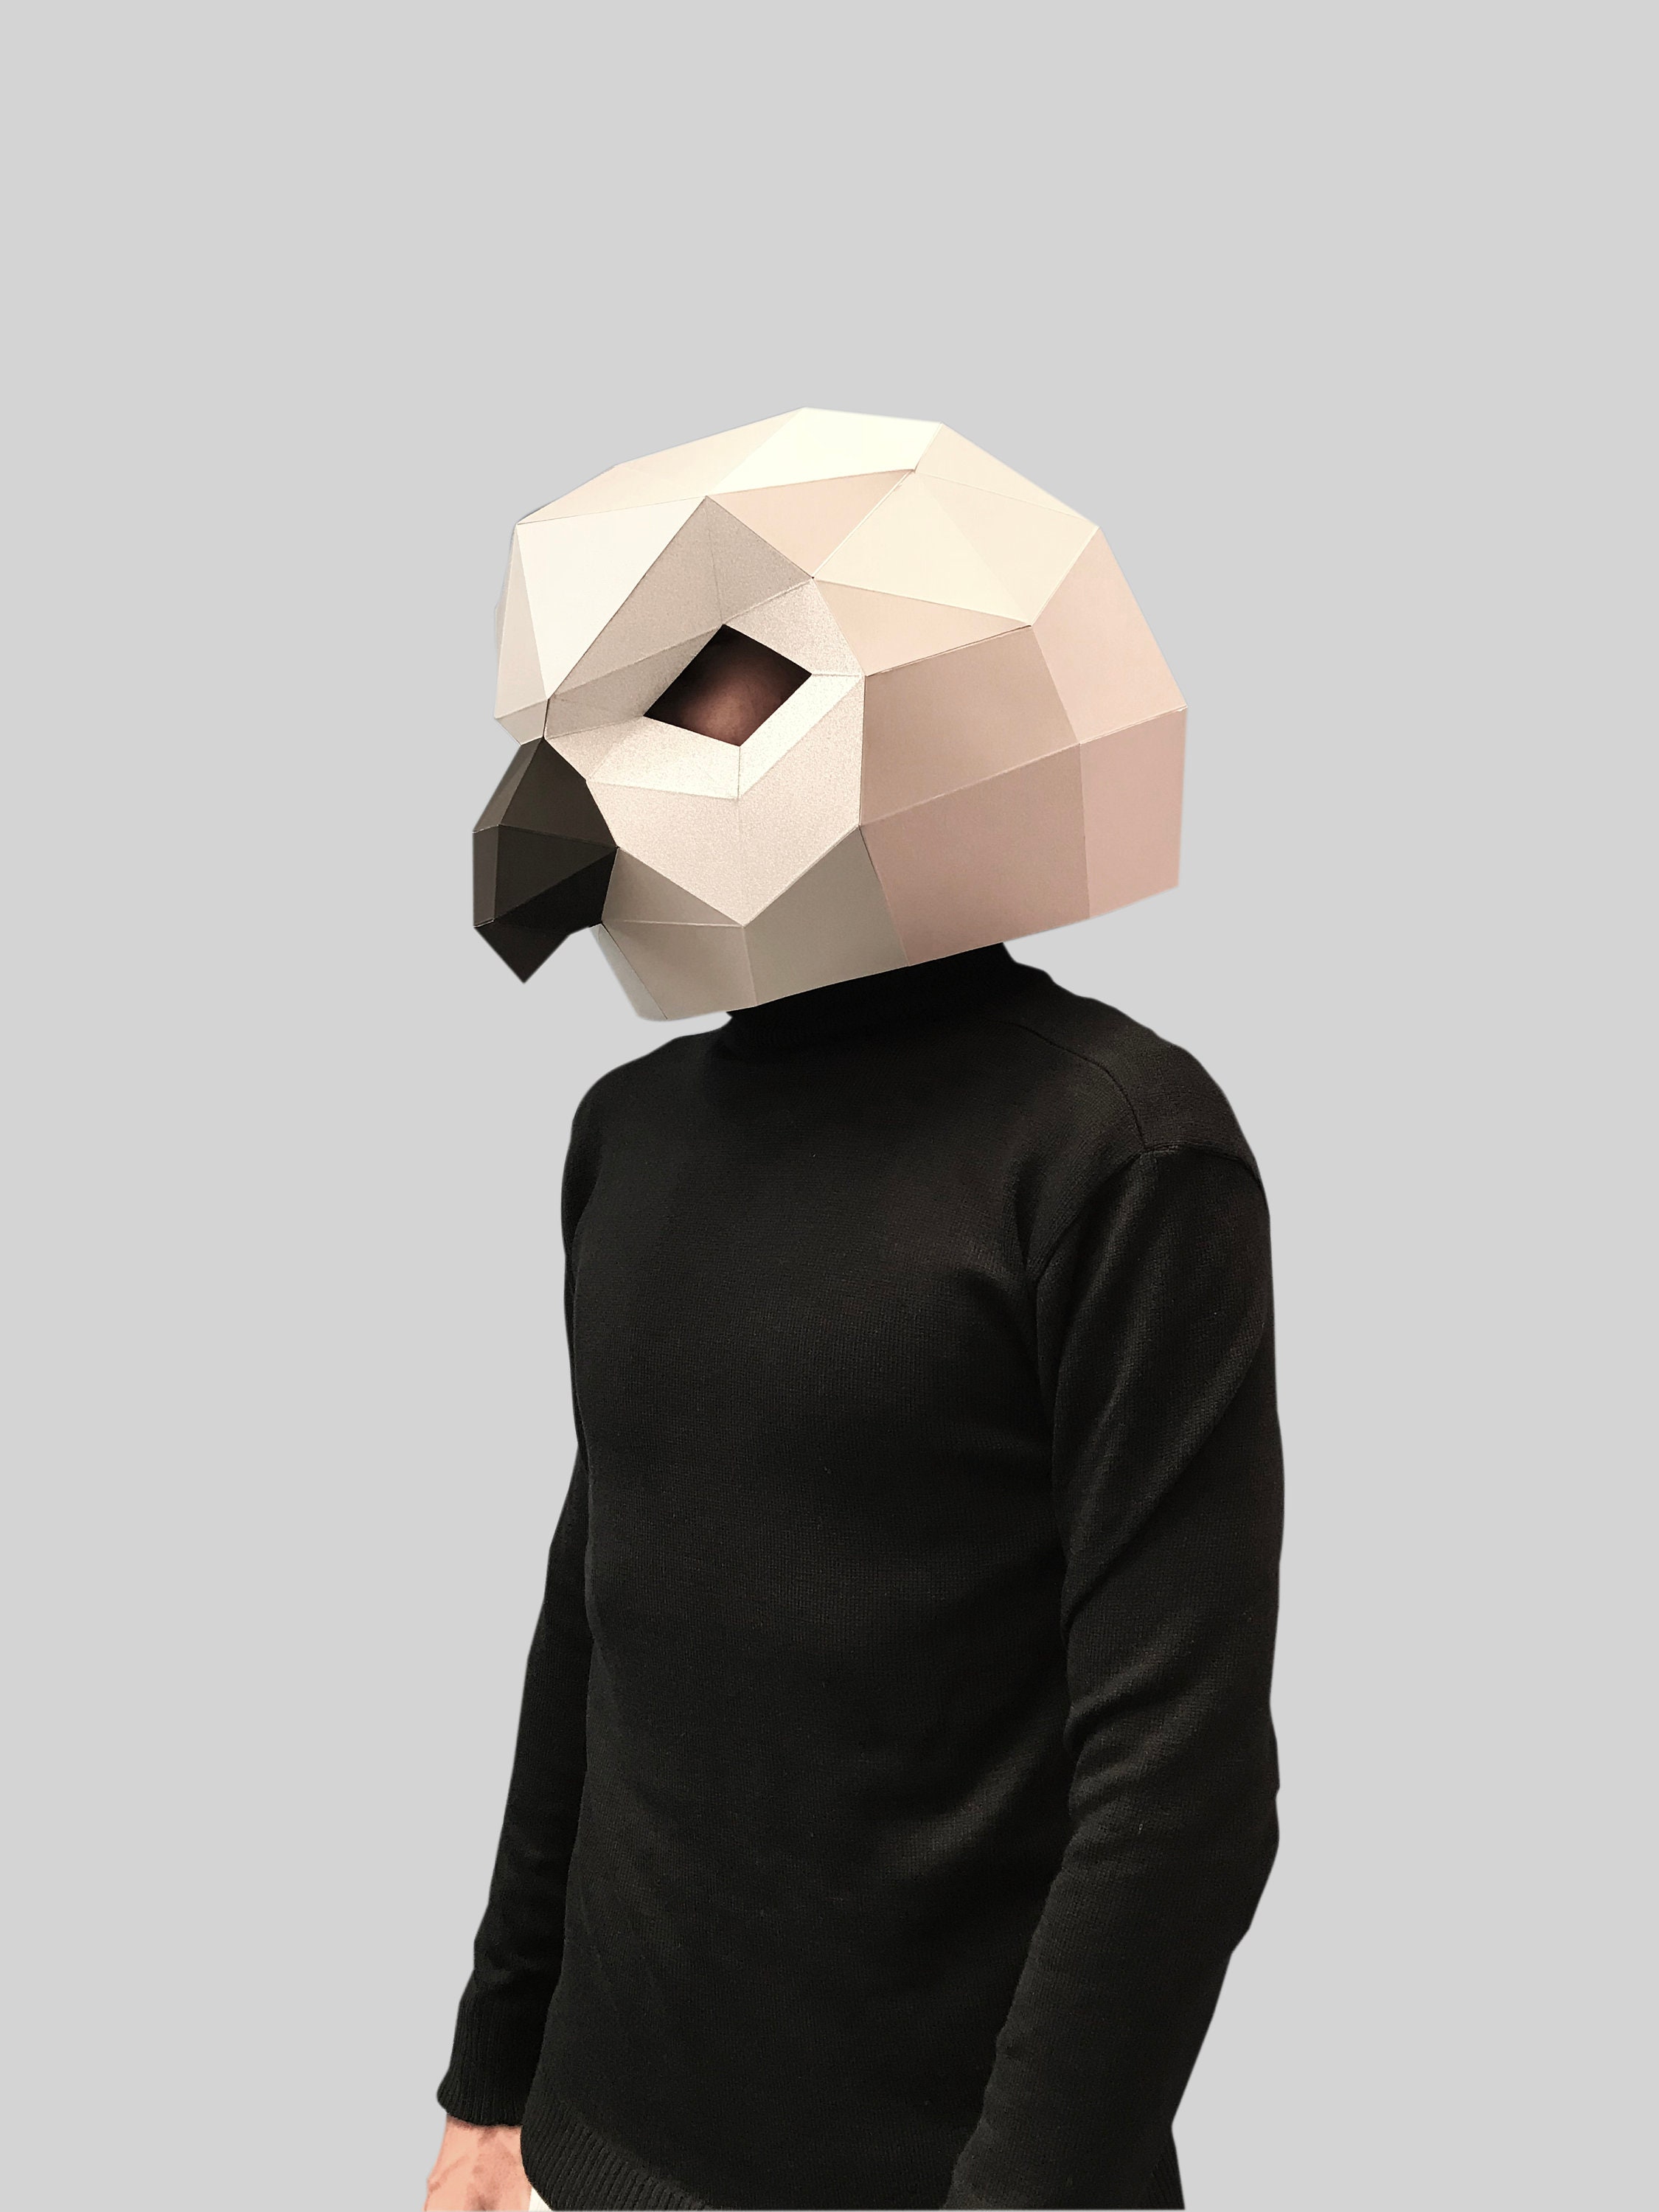 Pirate Owl Mask Template Paper Mask Papercraft Mask Masks | Etsy